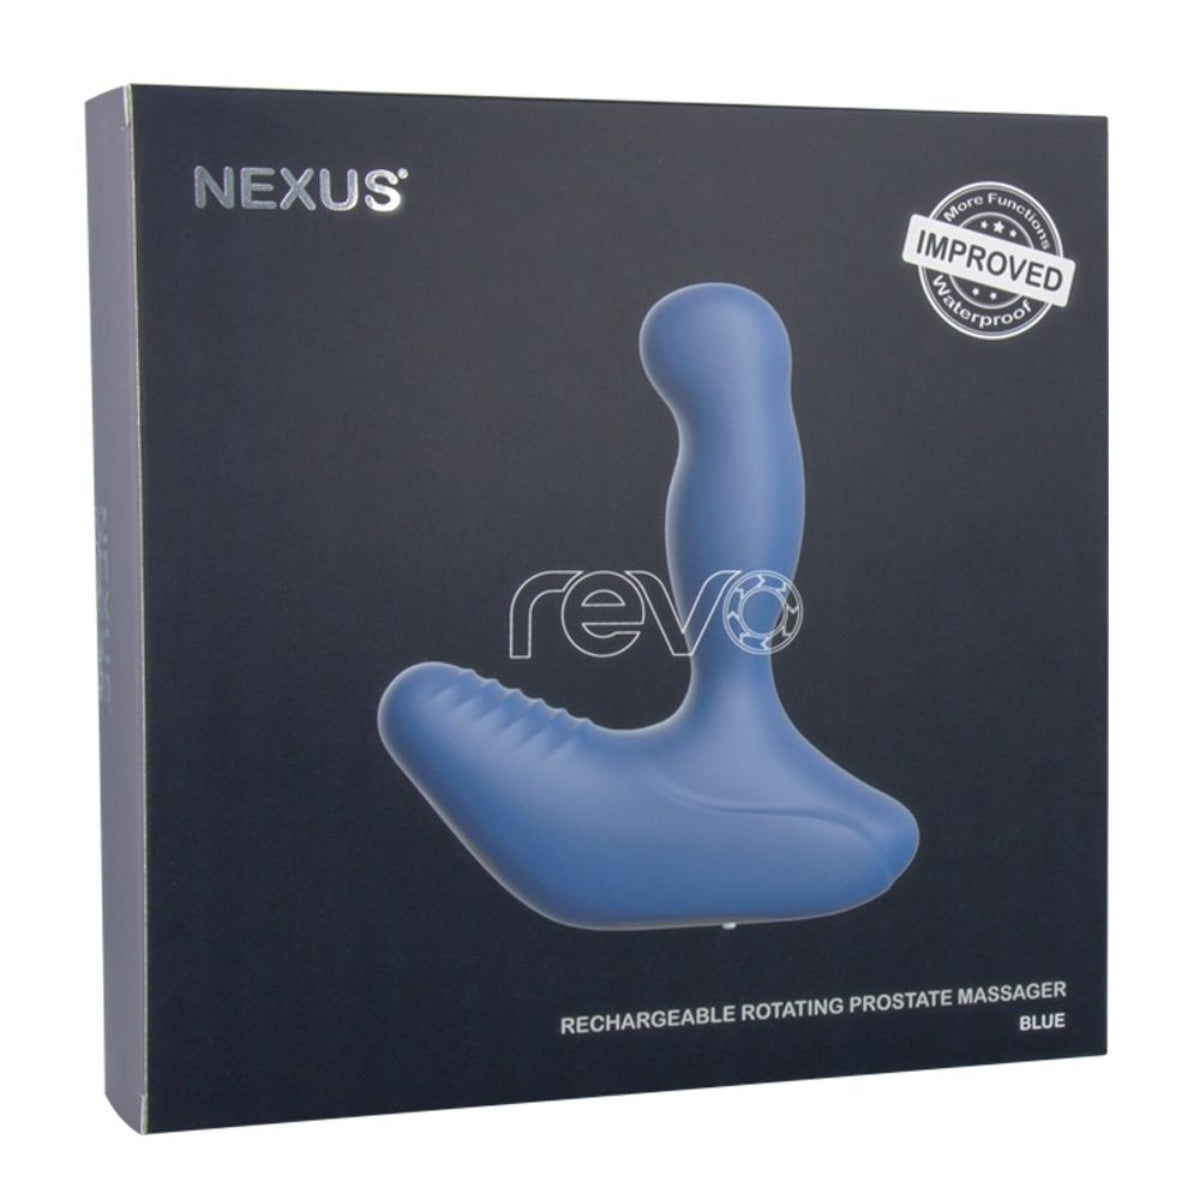 Nexus Revo Rechargeable Rotating Prostate Massager Blue